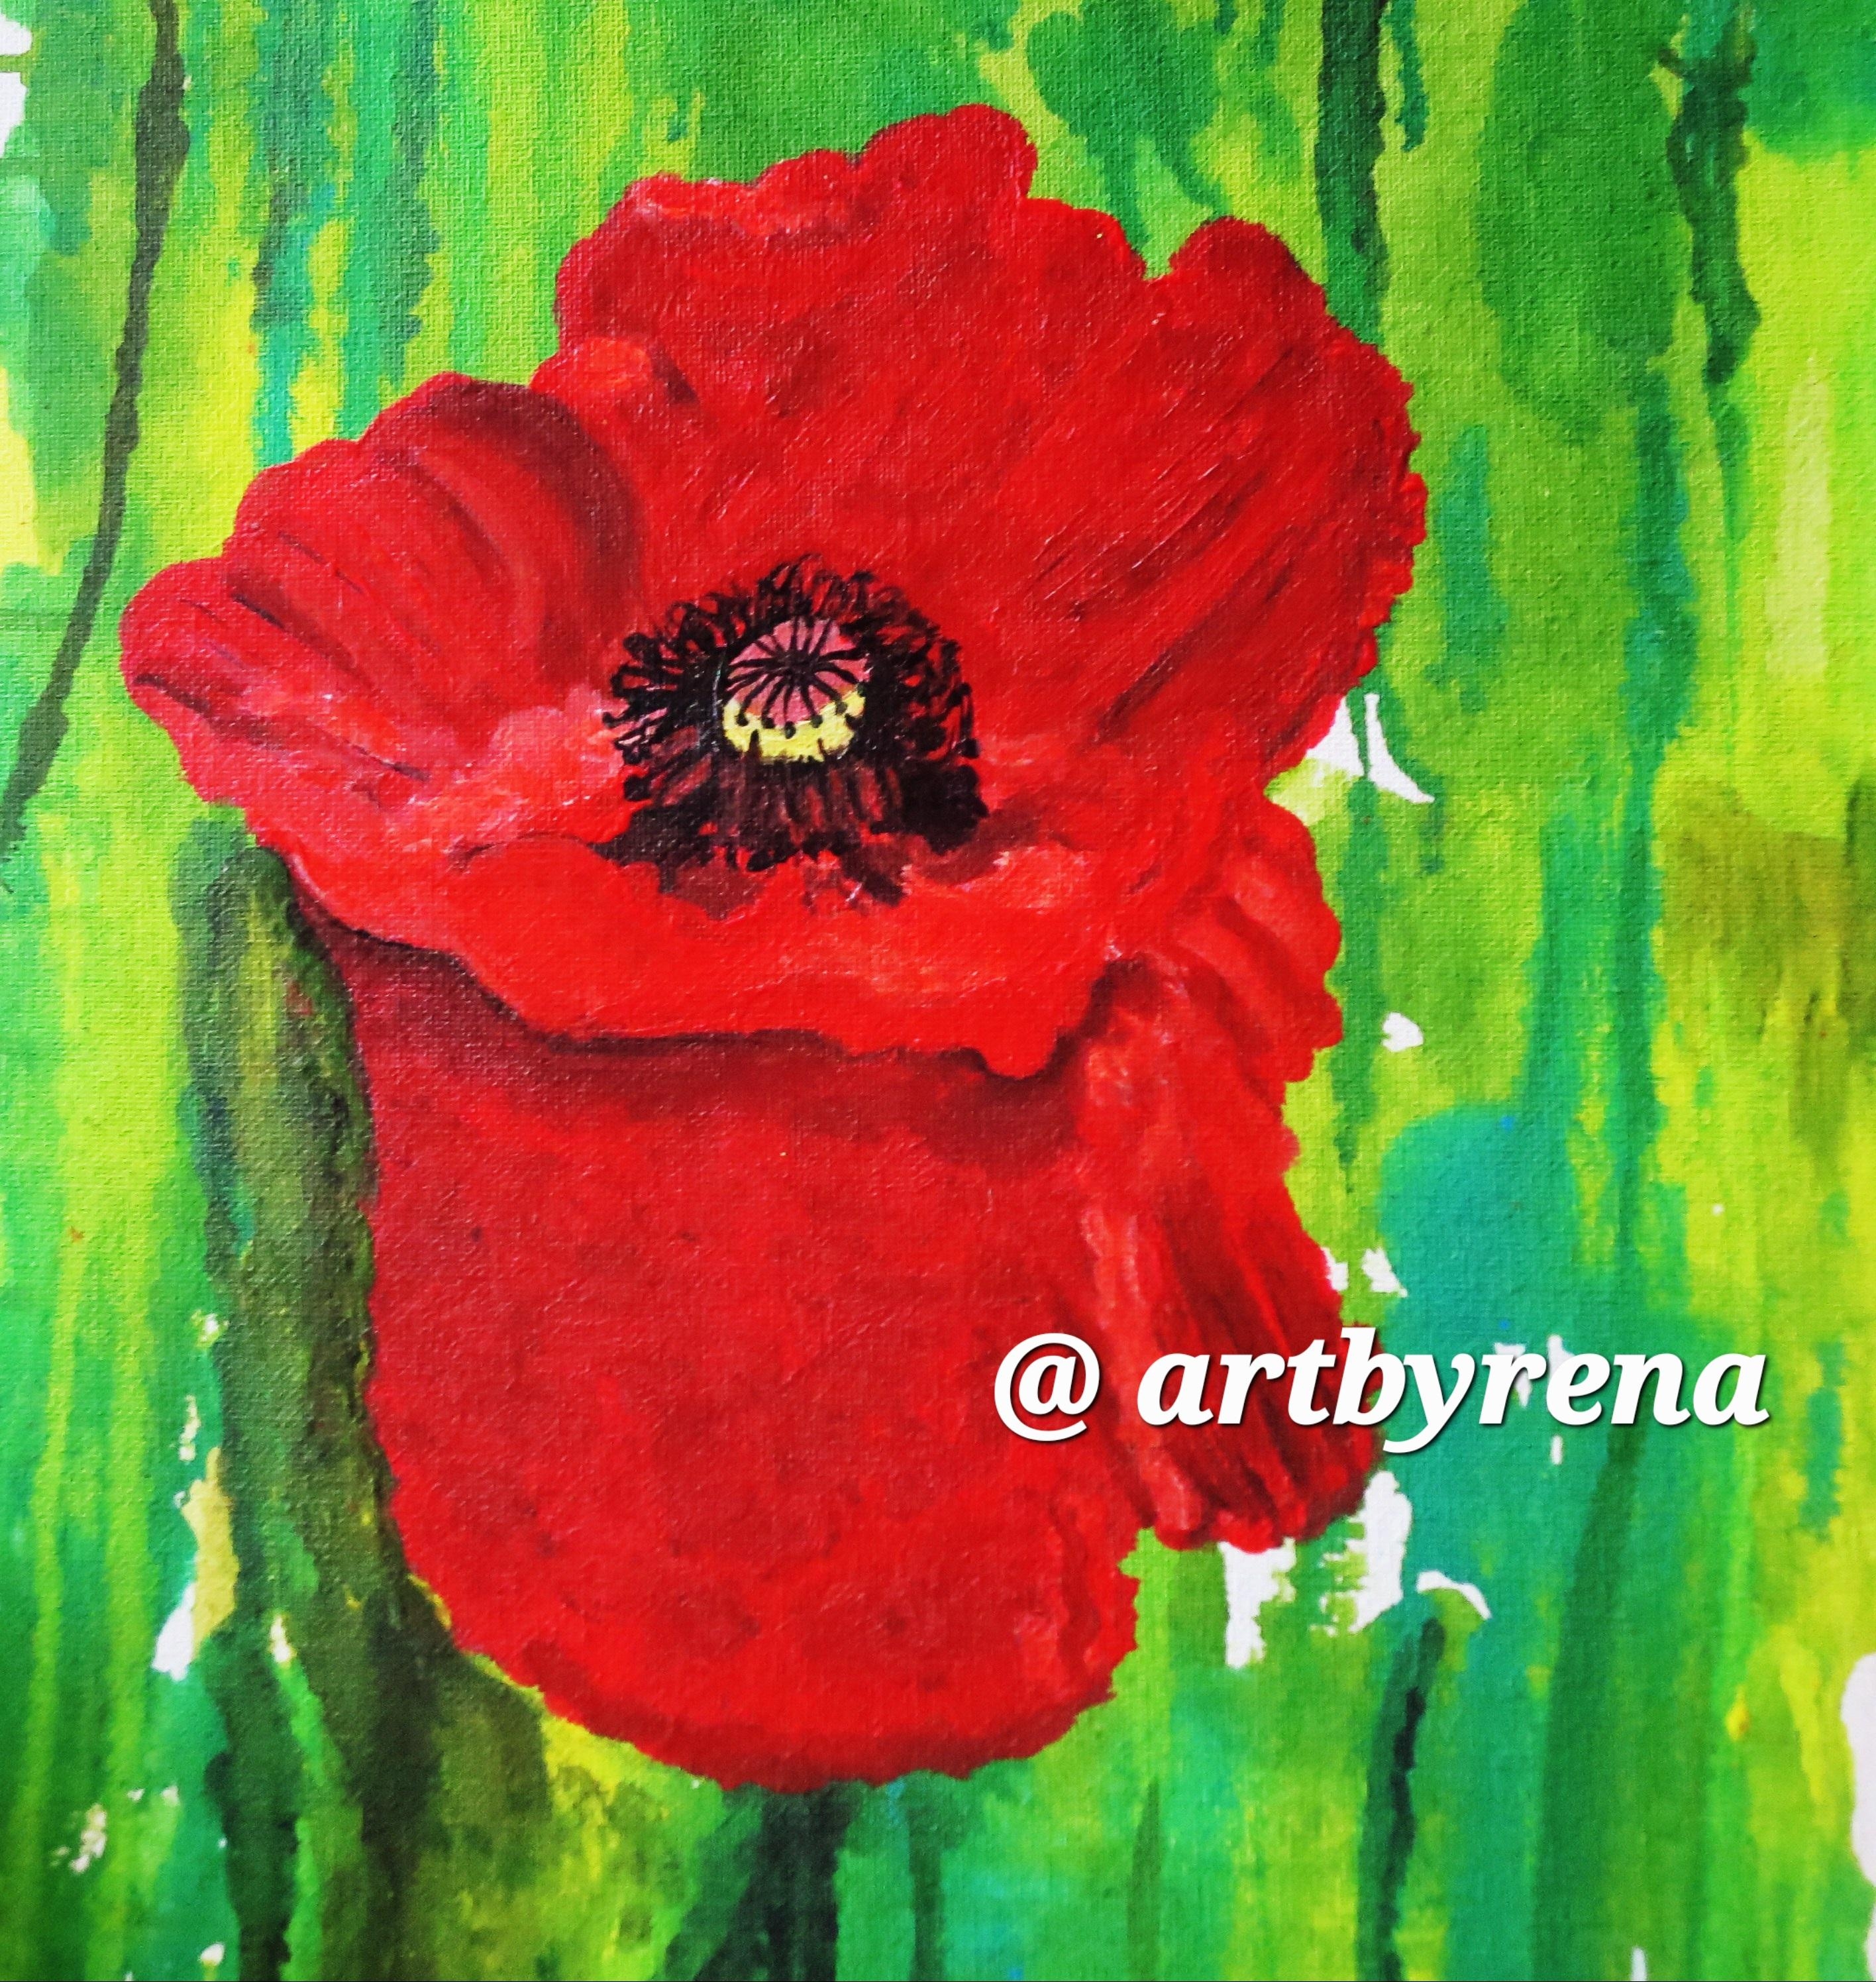 Mohnblüte ♡
#art #künstlerin #diy #acryl #leinwand #wandbild #farben #instagram.com/art_by_rena #artflakeskunstdruck  